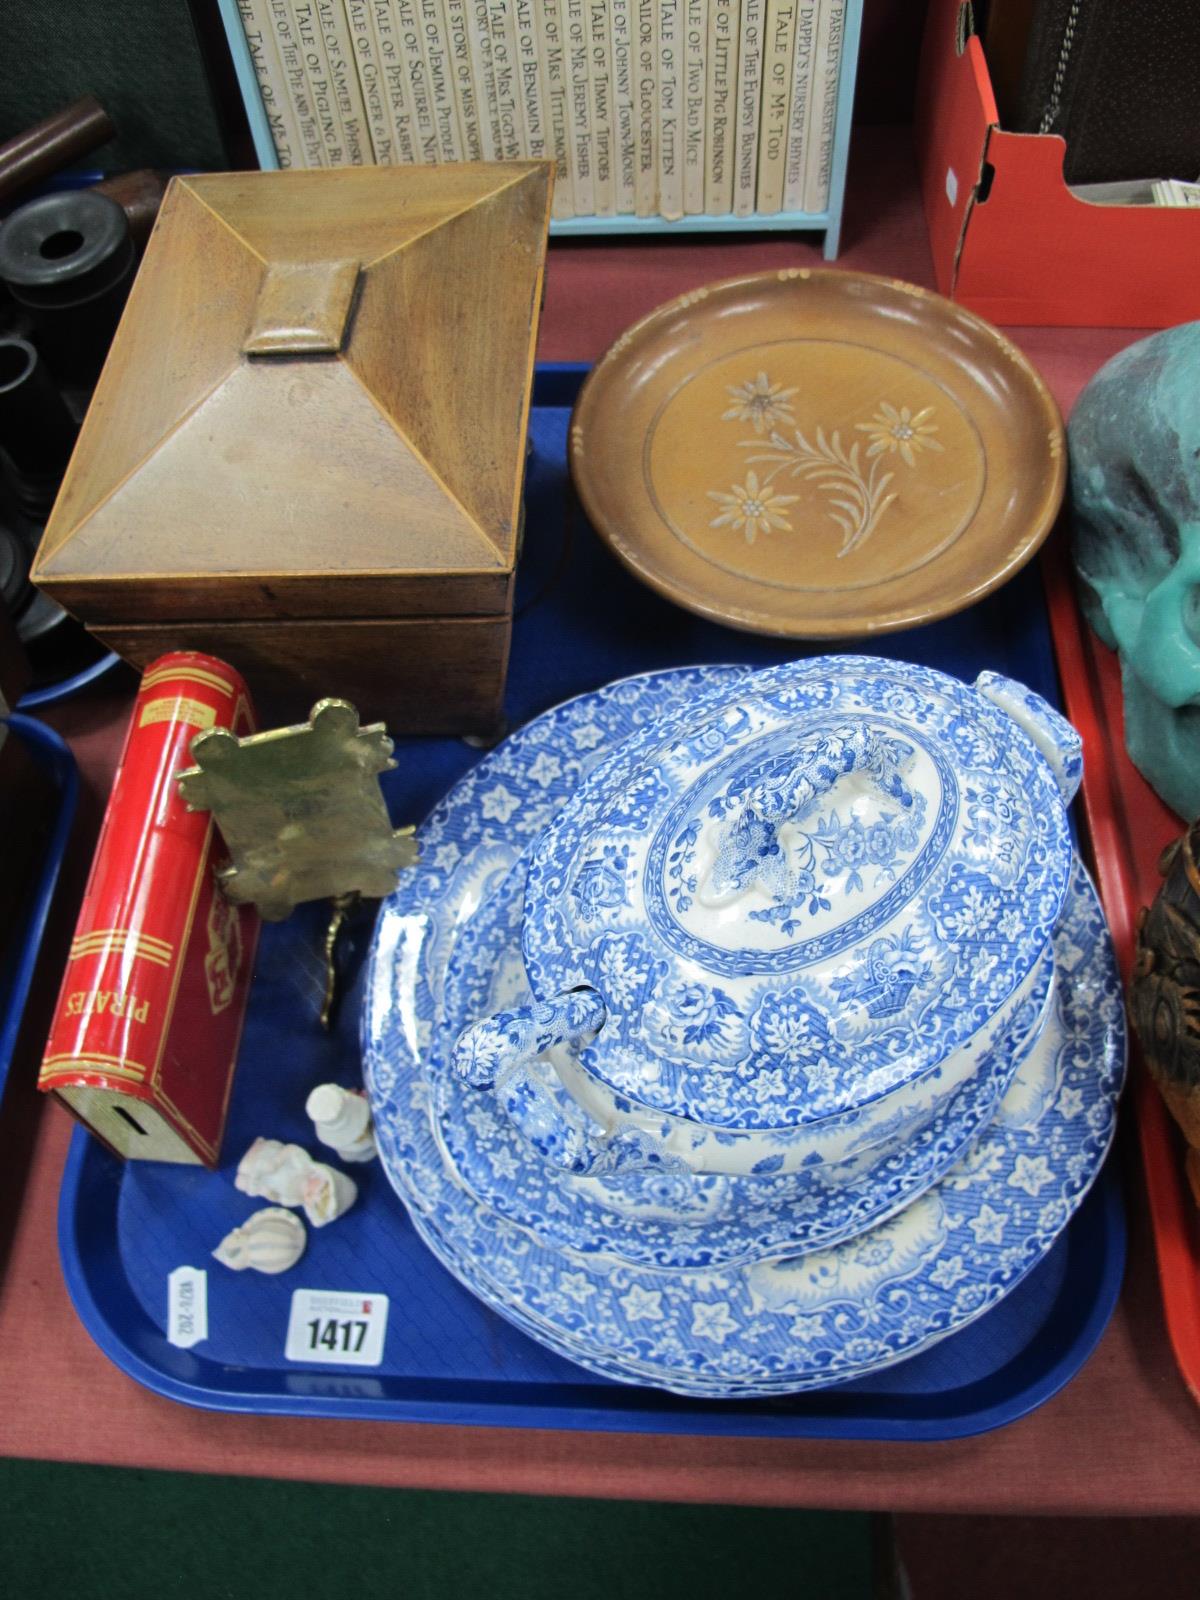 A XIX Century Mahogany Tea Caddy, with boxwood stringing, XIX Century blue-white Spode plates,